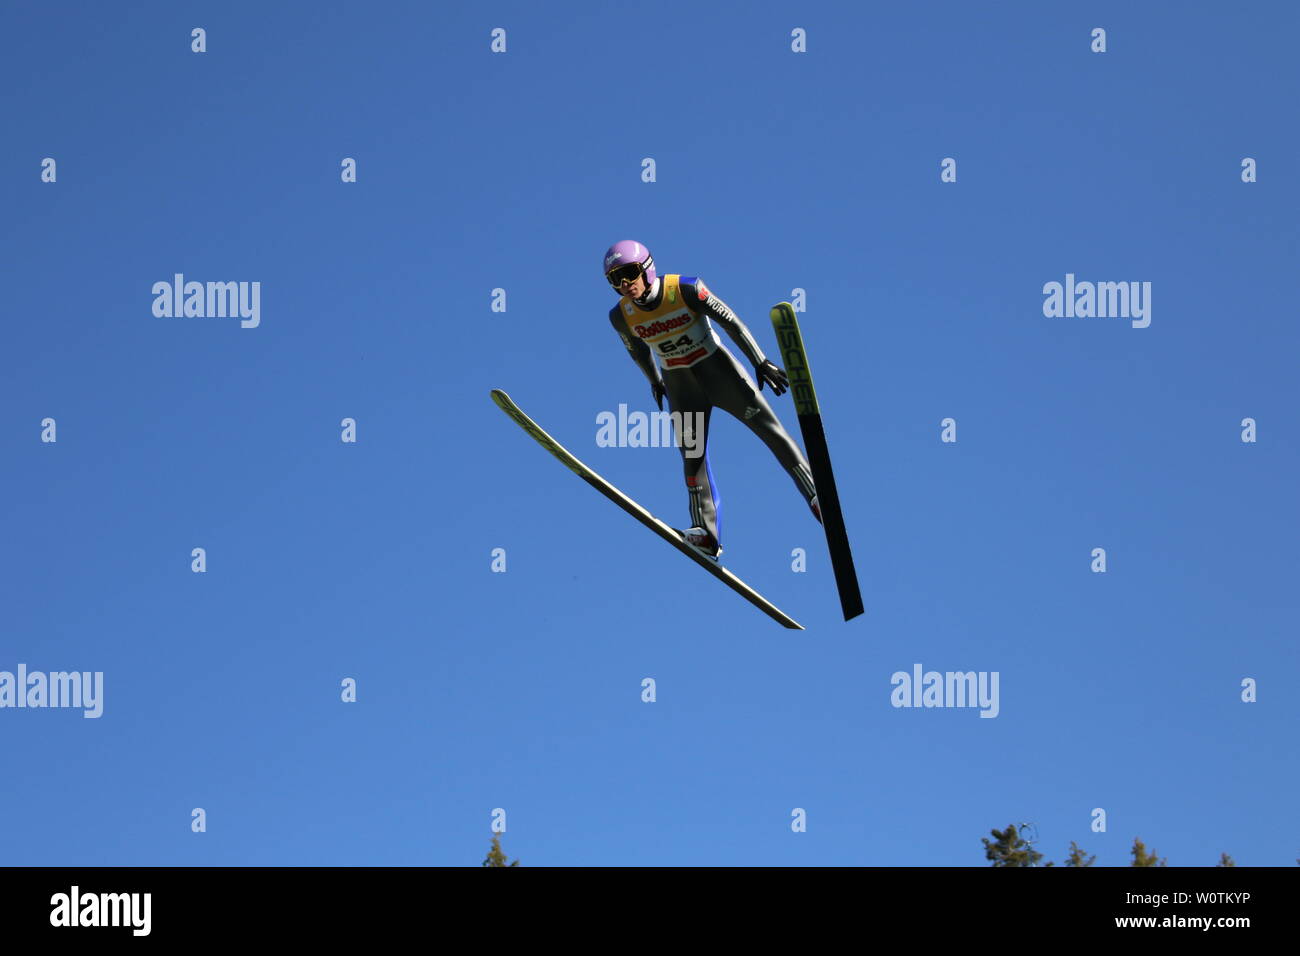 DM Einzel Skisprung Hinterzarten 2018 Foto de stock